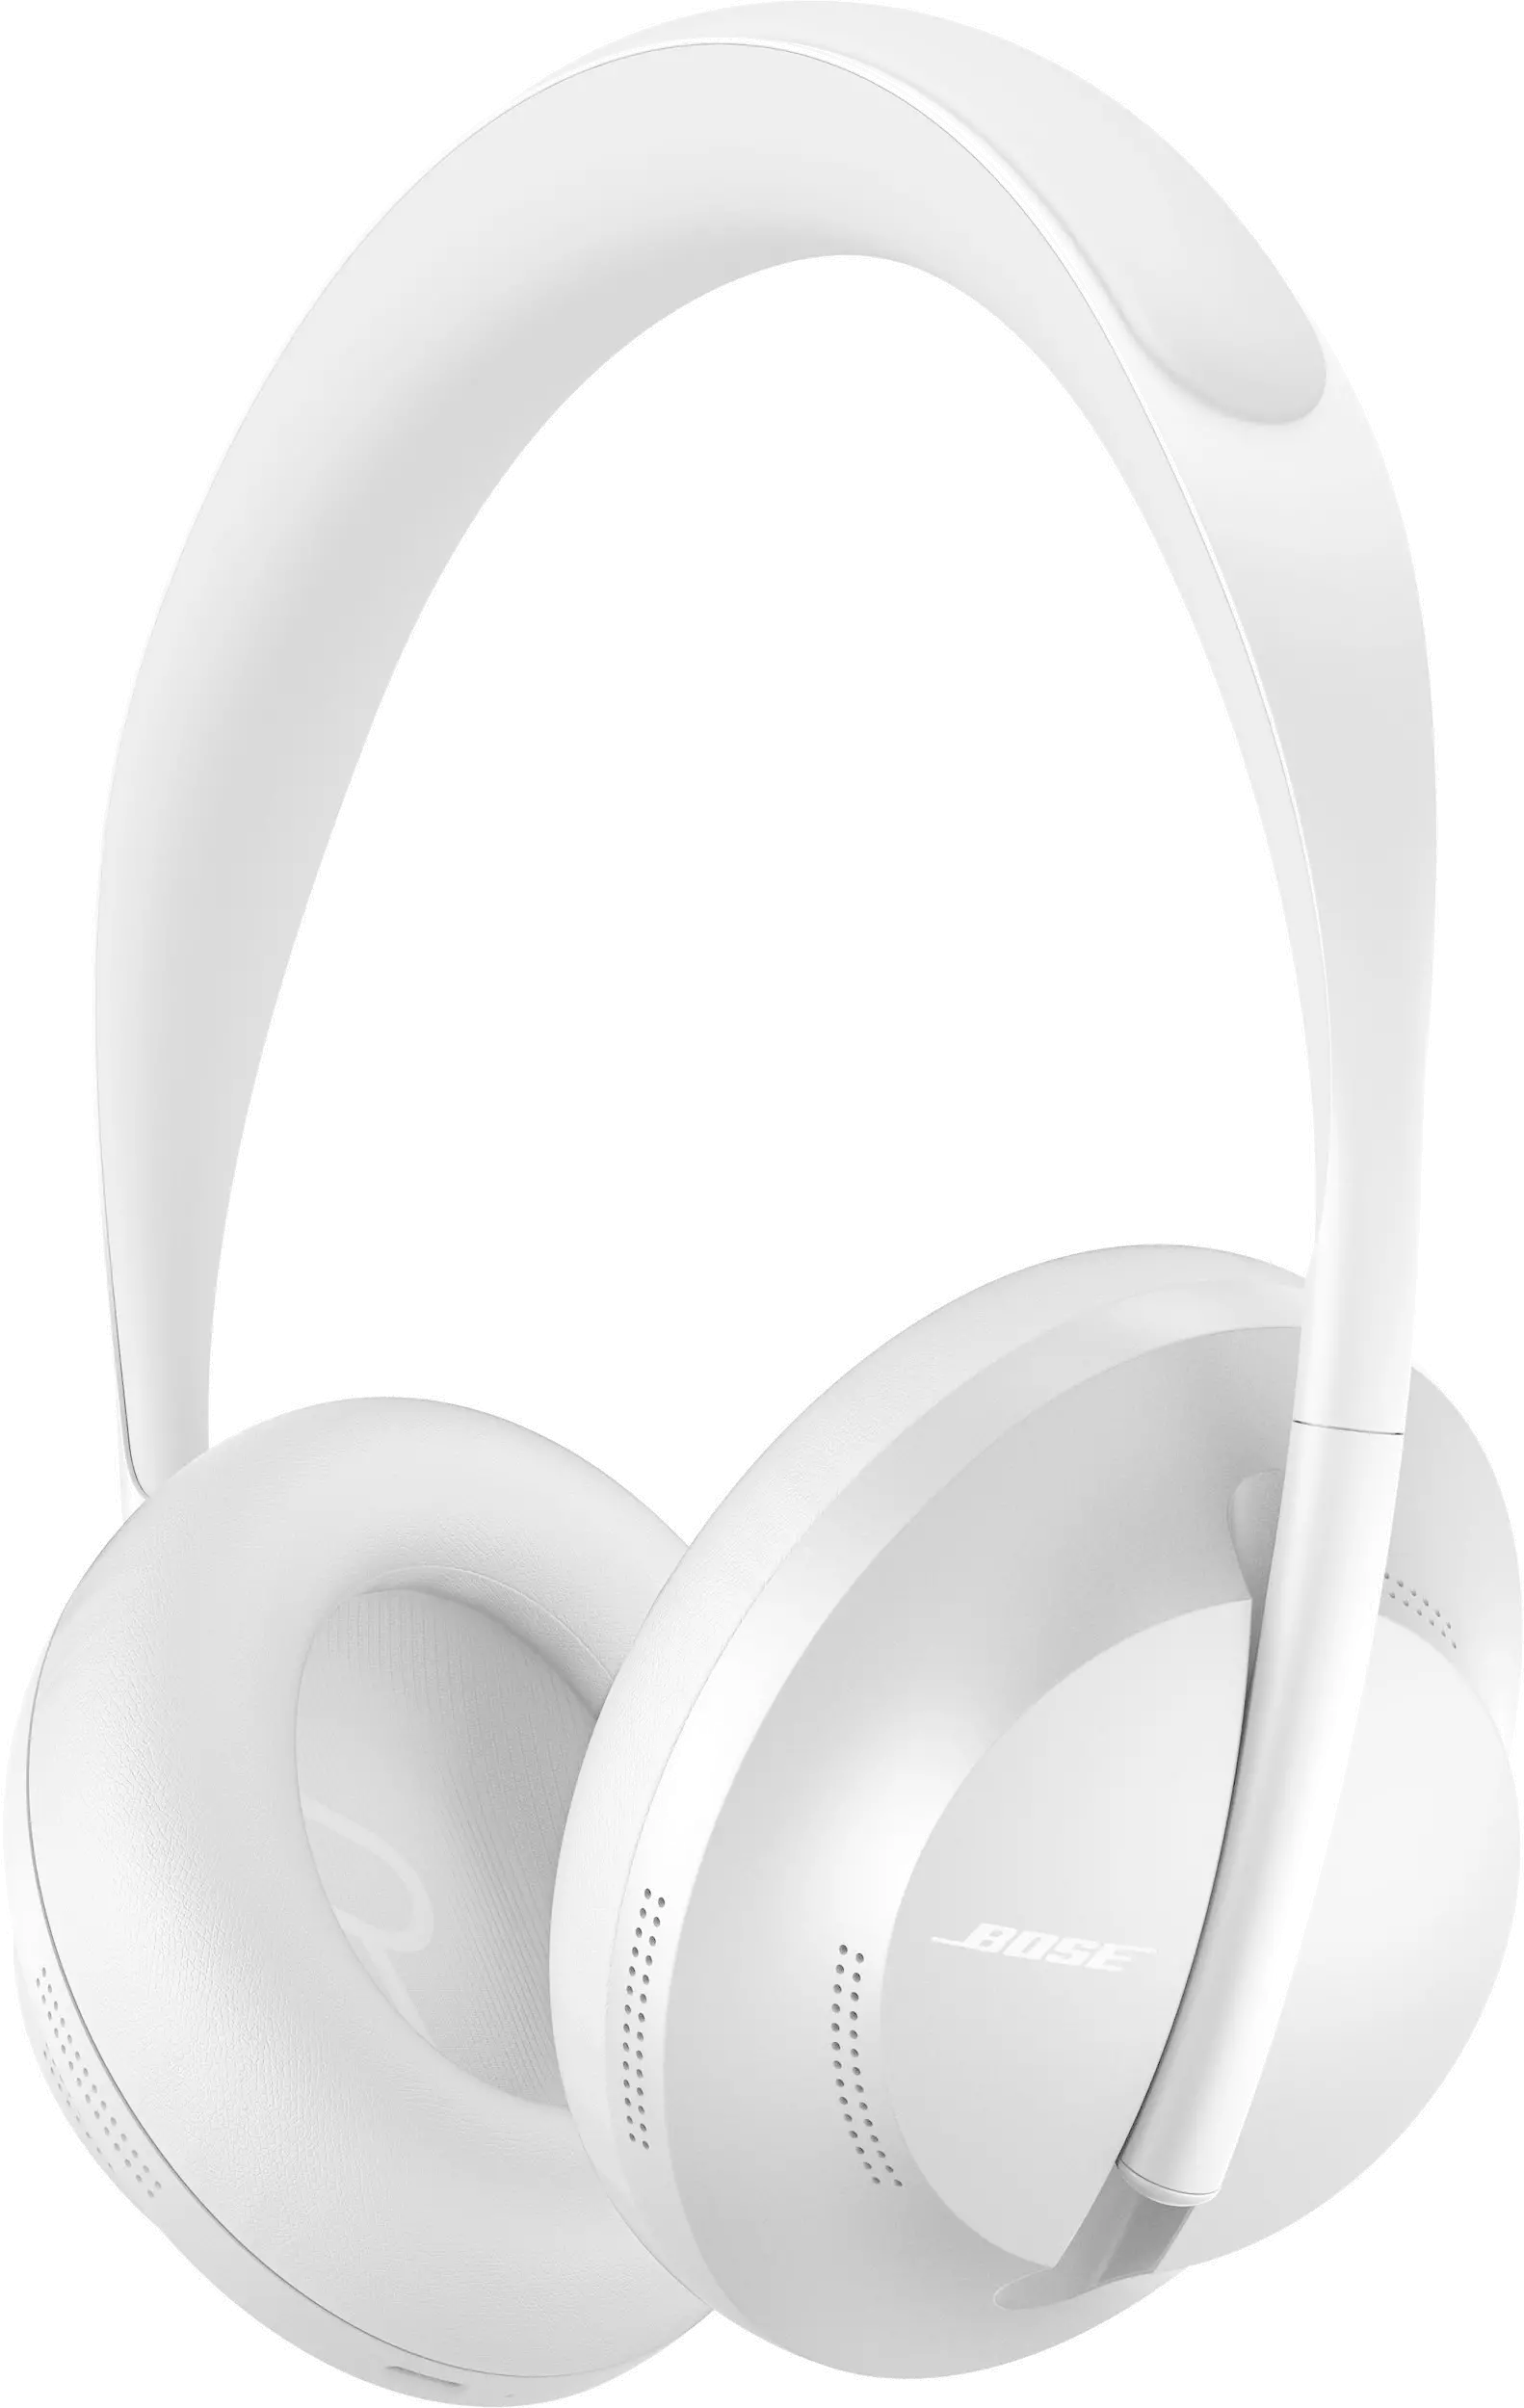 Bose Headphones 700 Noise-Canceling Bluetooth 794297-0300 B&H